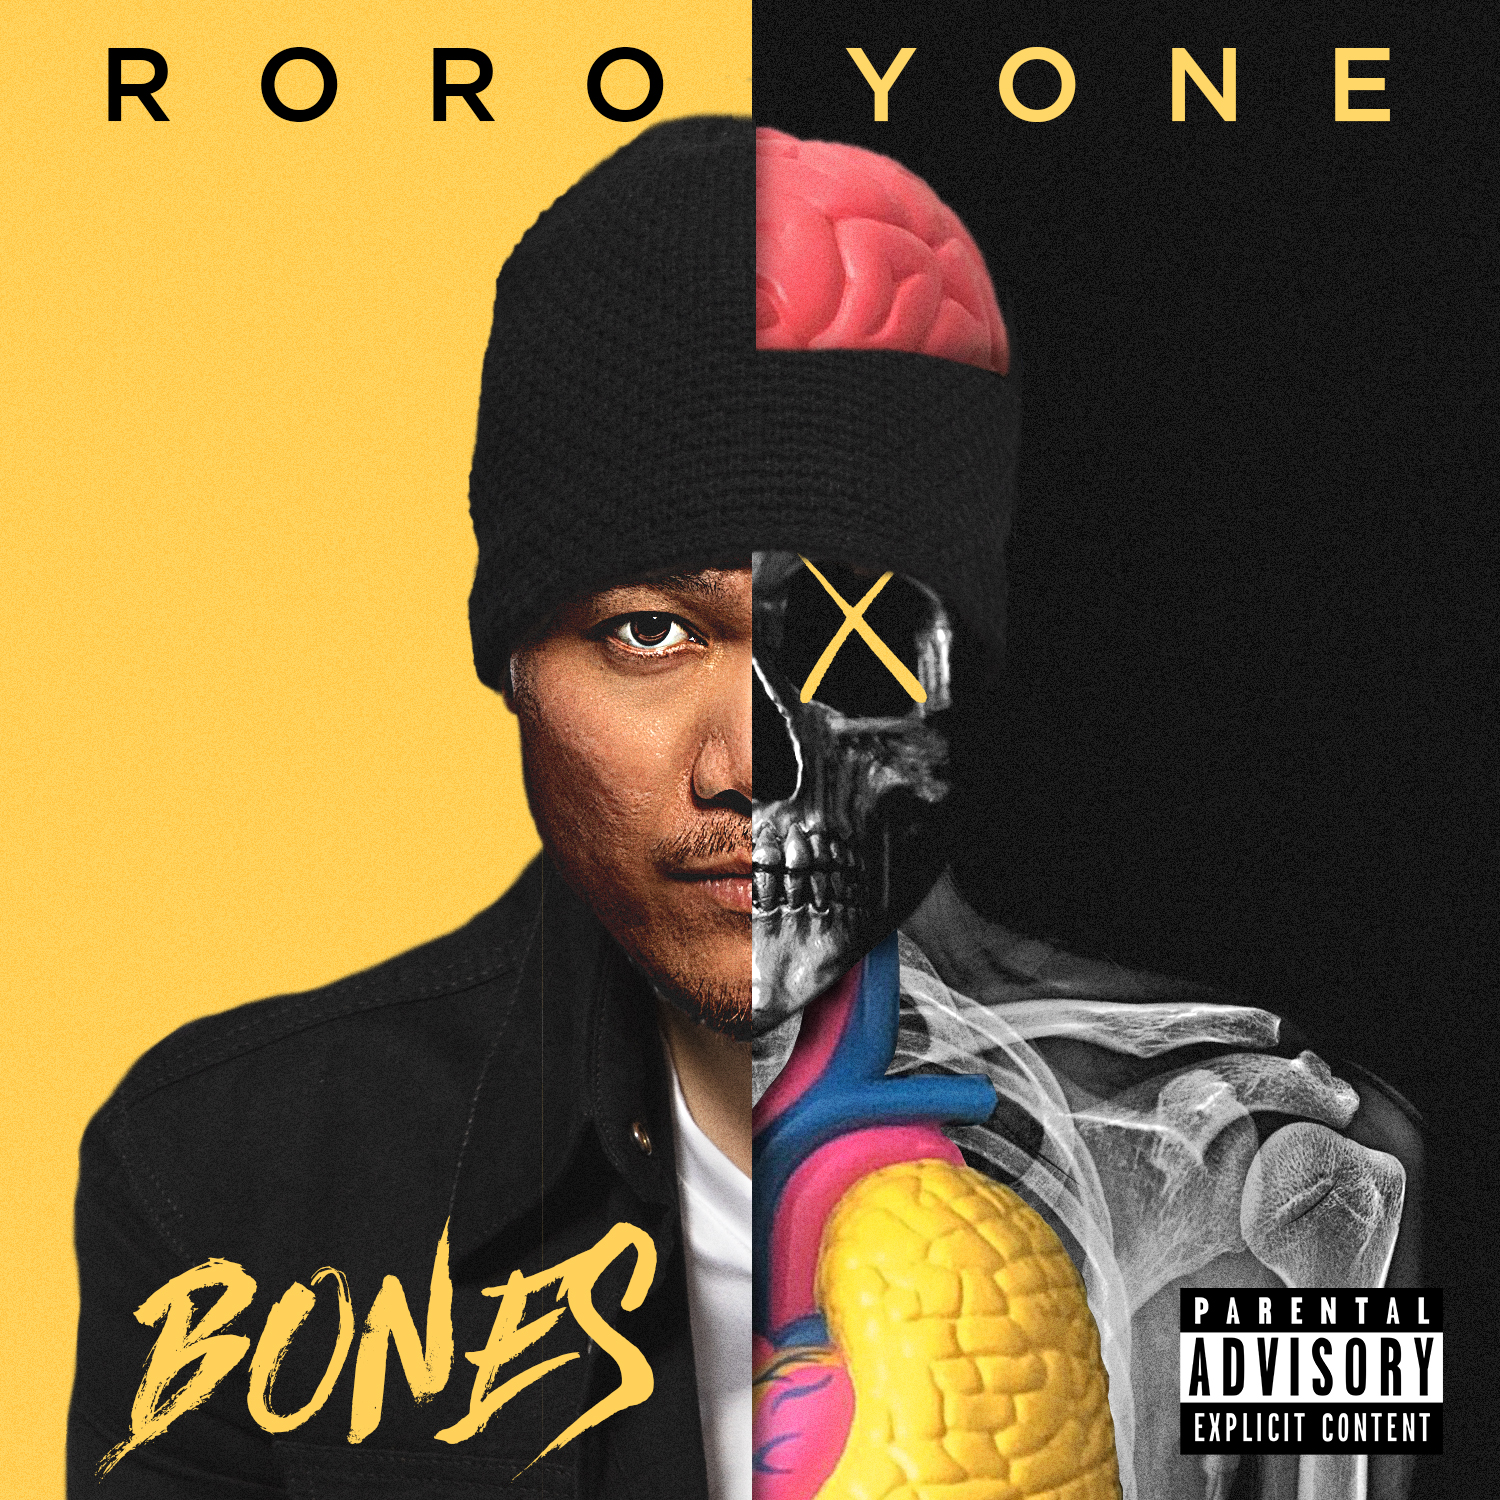 RoRo Yone’s Six-Track Album ‘Bones’ Catching Steam In The Music Industry